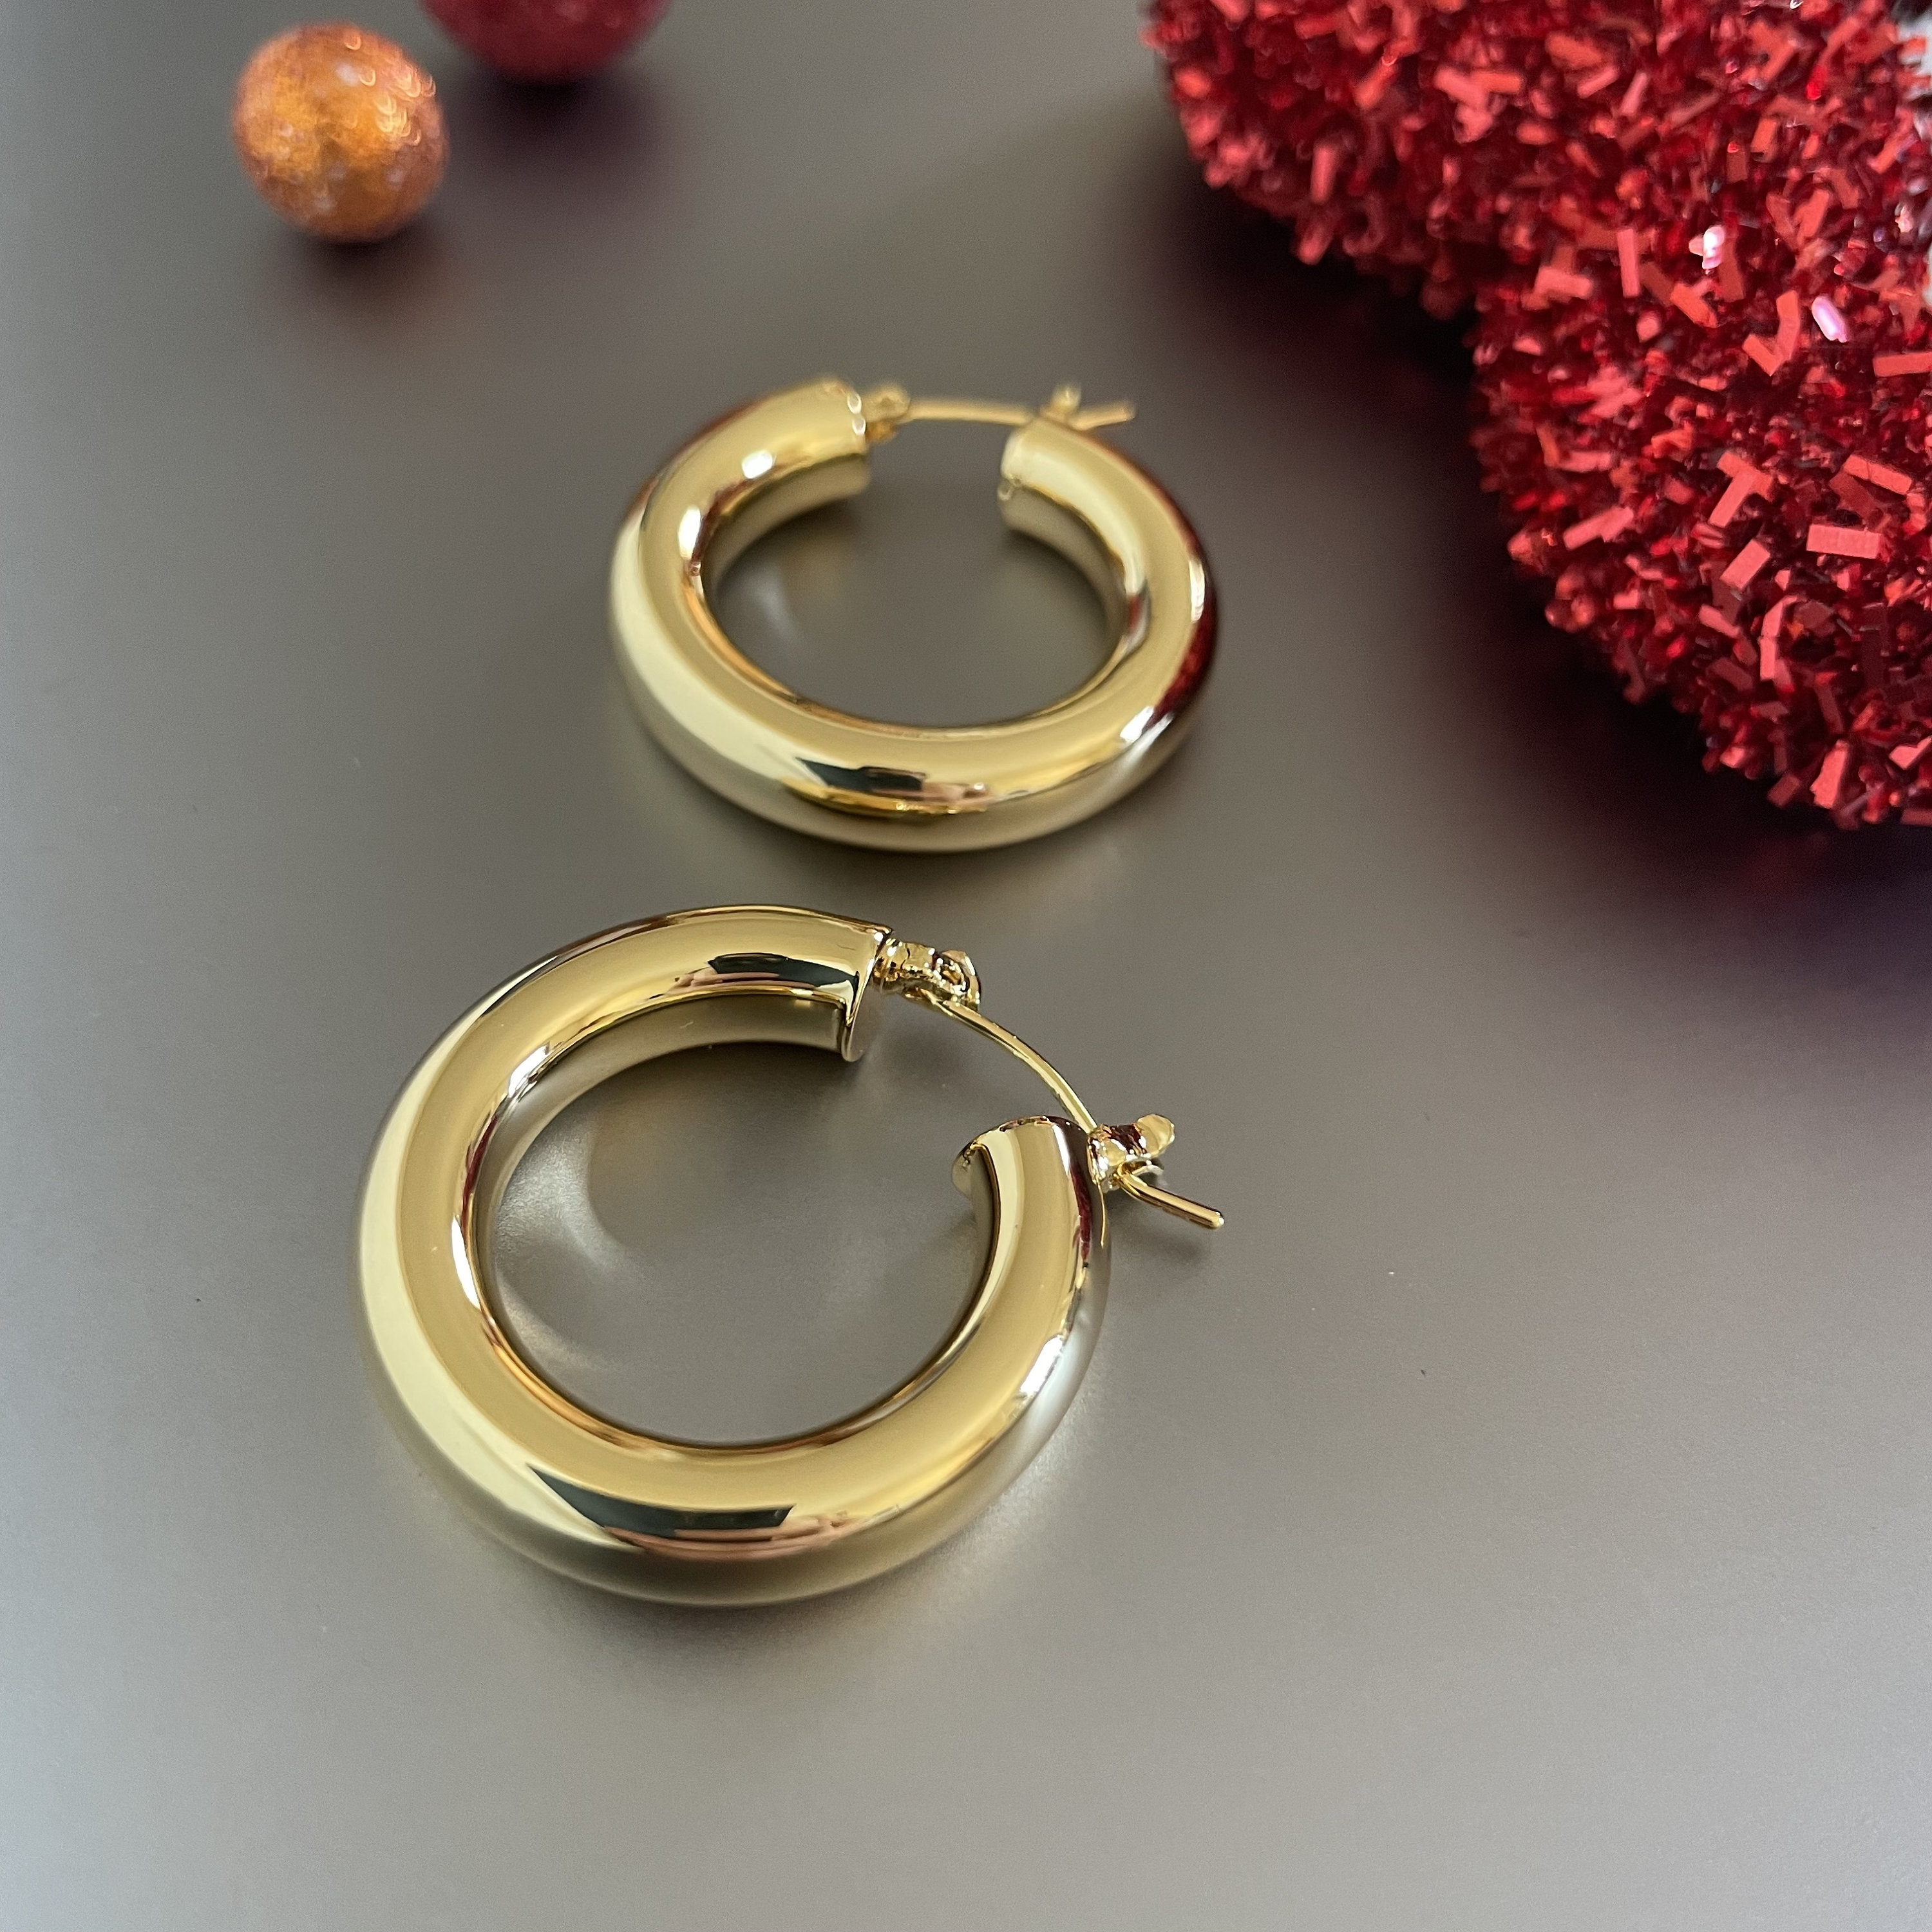 Chunky Gold Hoops Gold Thick Hoop Earrings Statement Minimalist Earrings 14k Gold Filled Hoop Earrings Bold Rectangular Oval Hoops